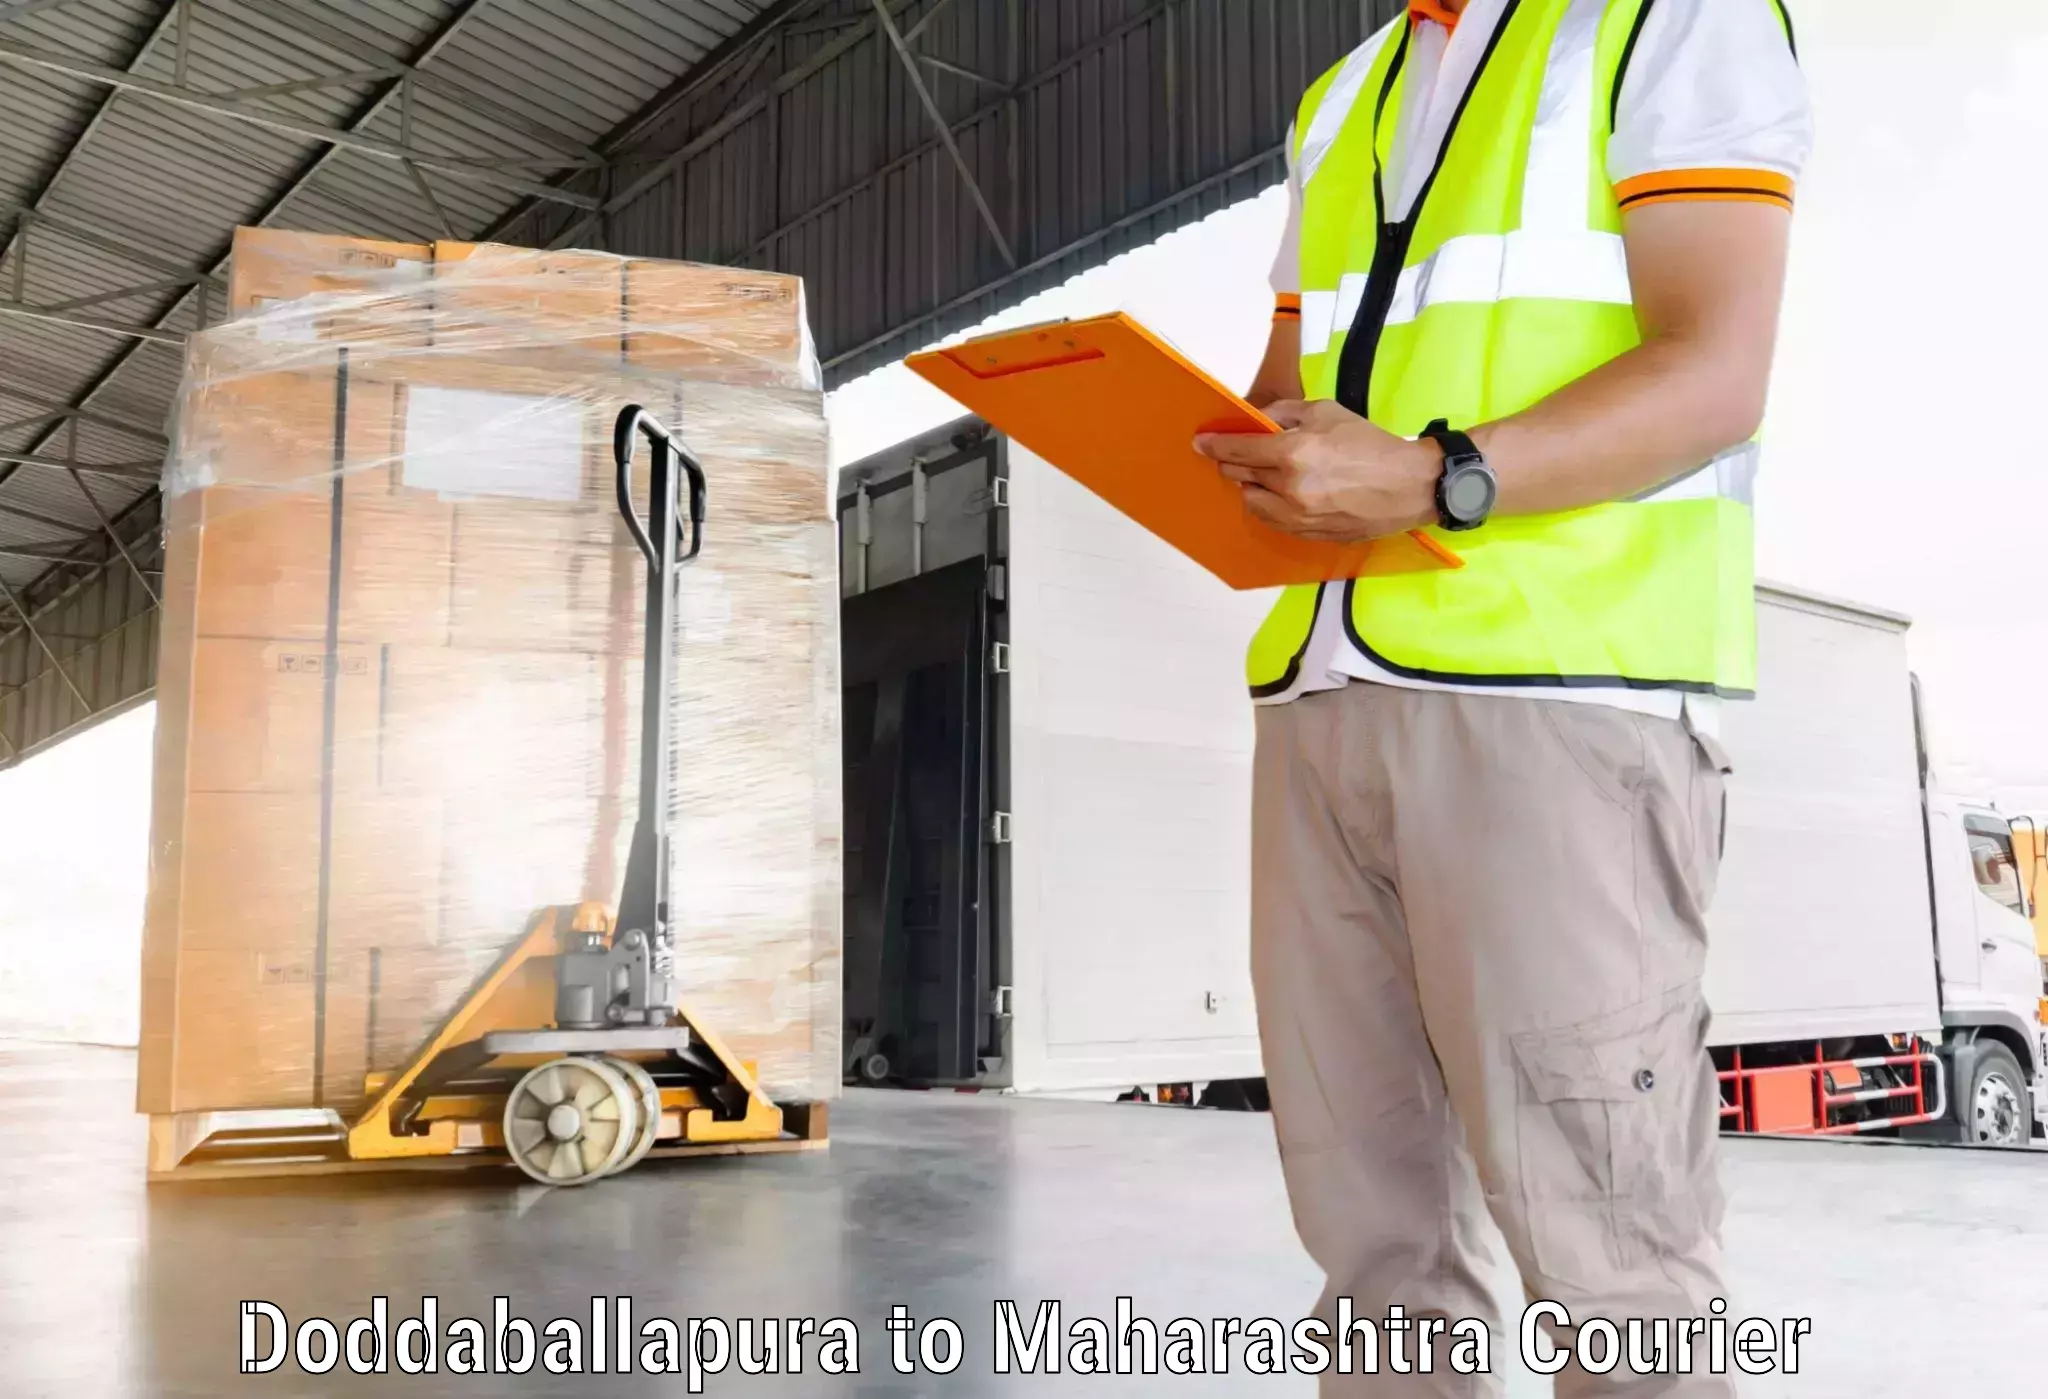 Efficient cargo handling Doddaballapura to Thane